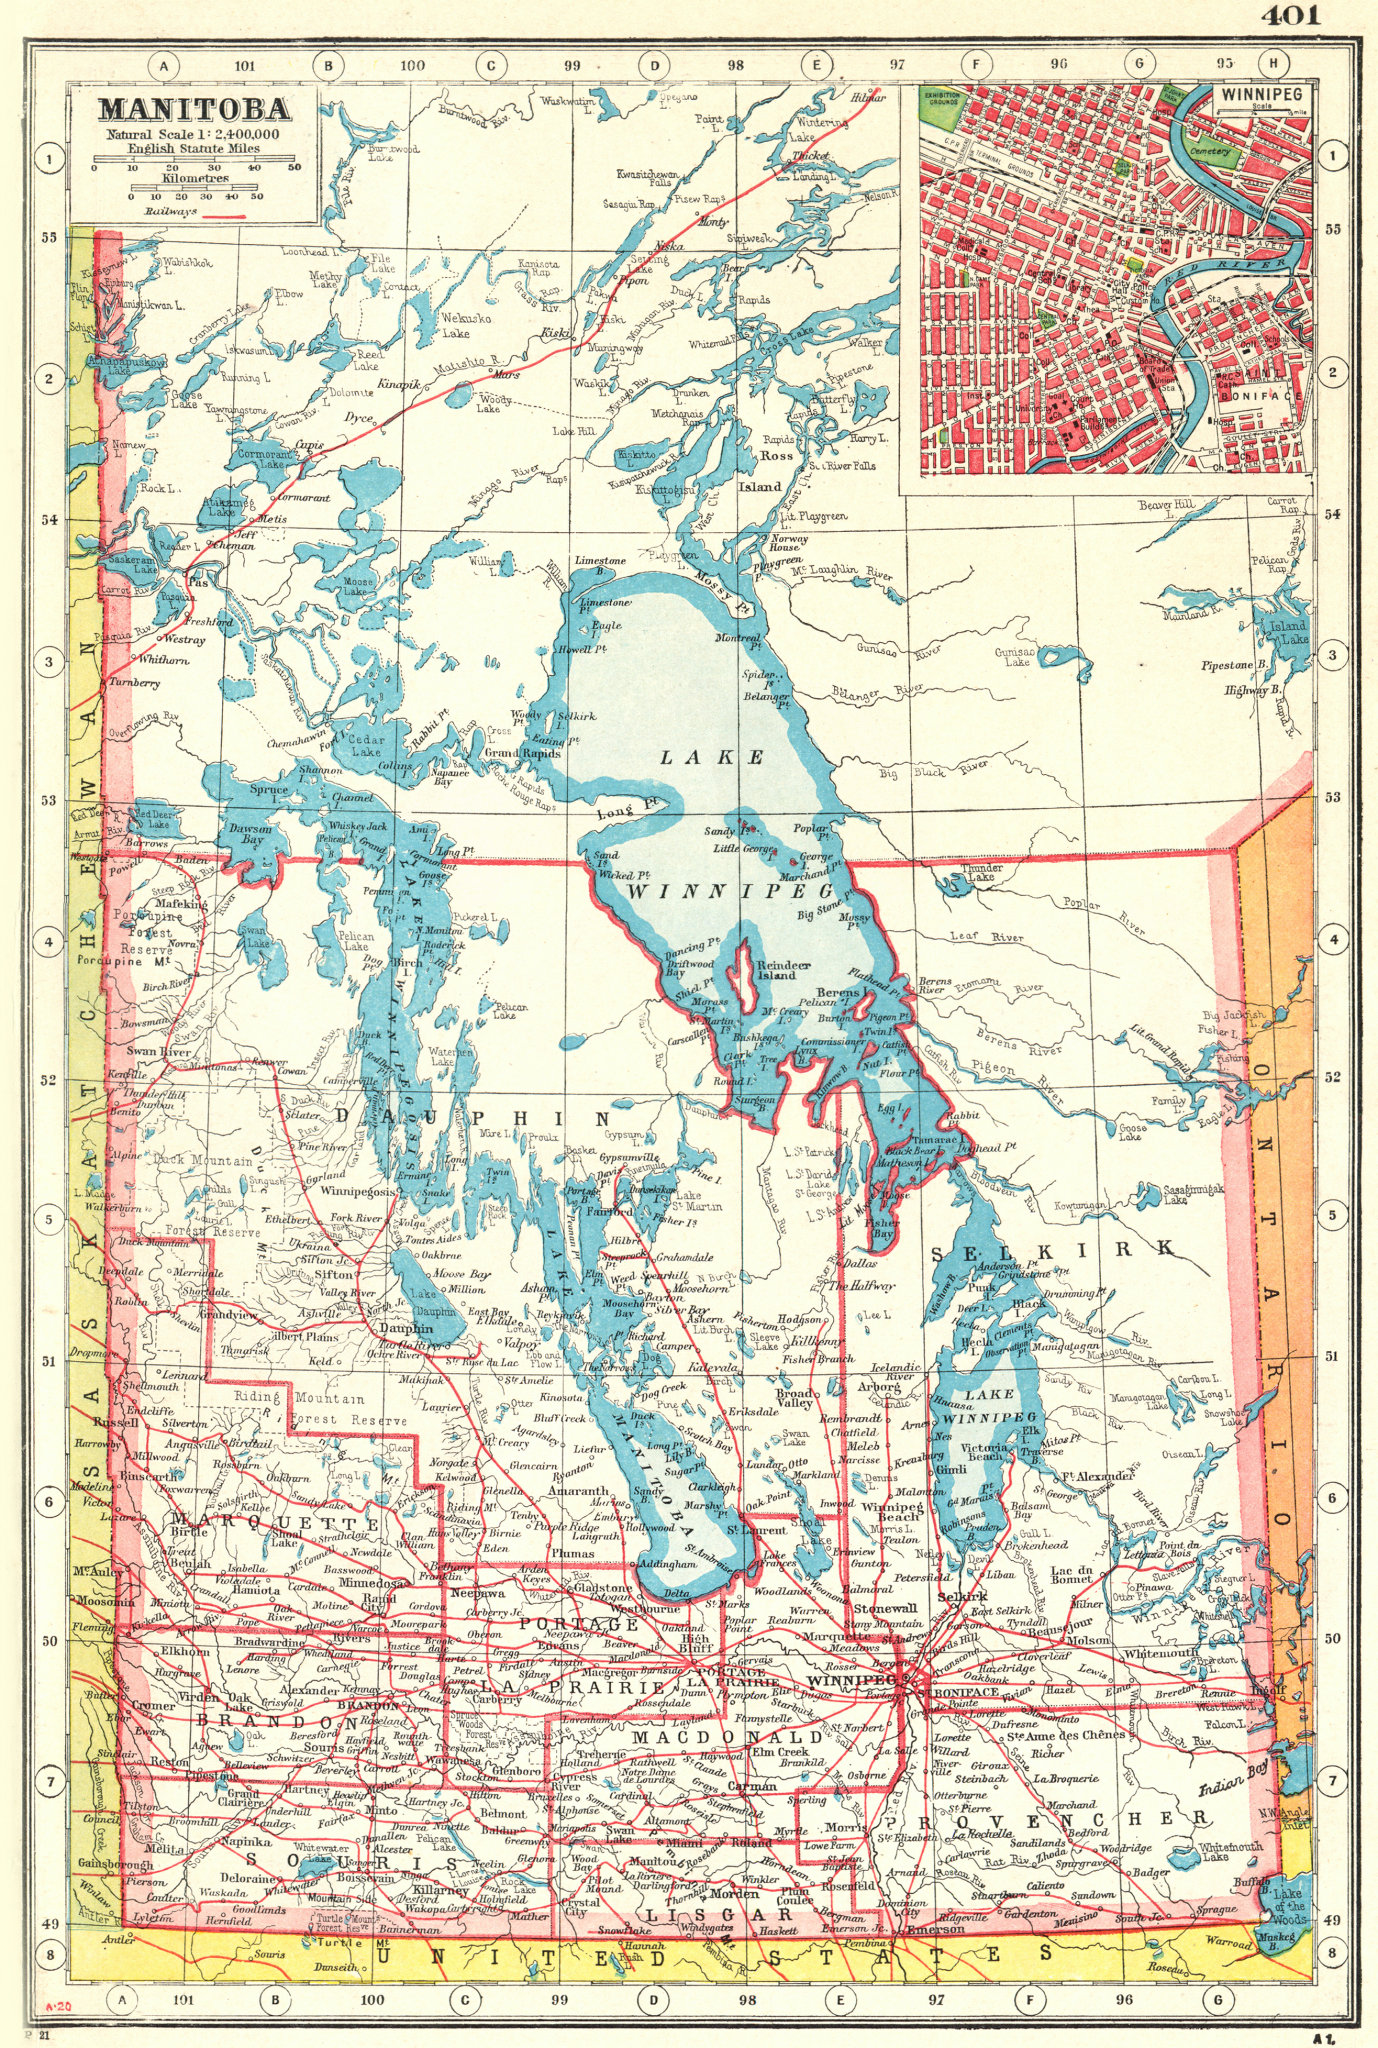 Associate Product MANITOBA. Inset Winnipeg city plan. HARMSWORTH 1920 old antique map chart